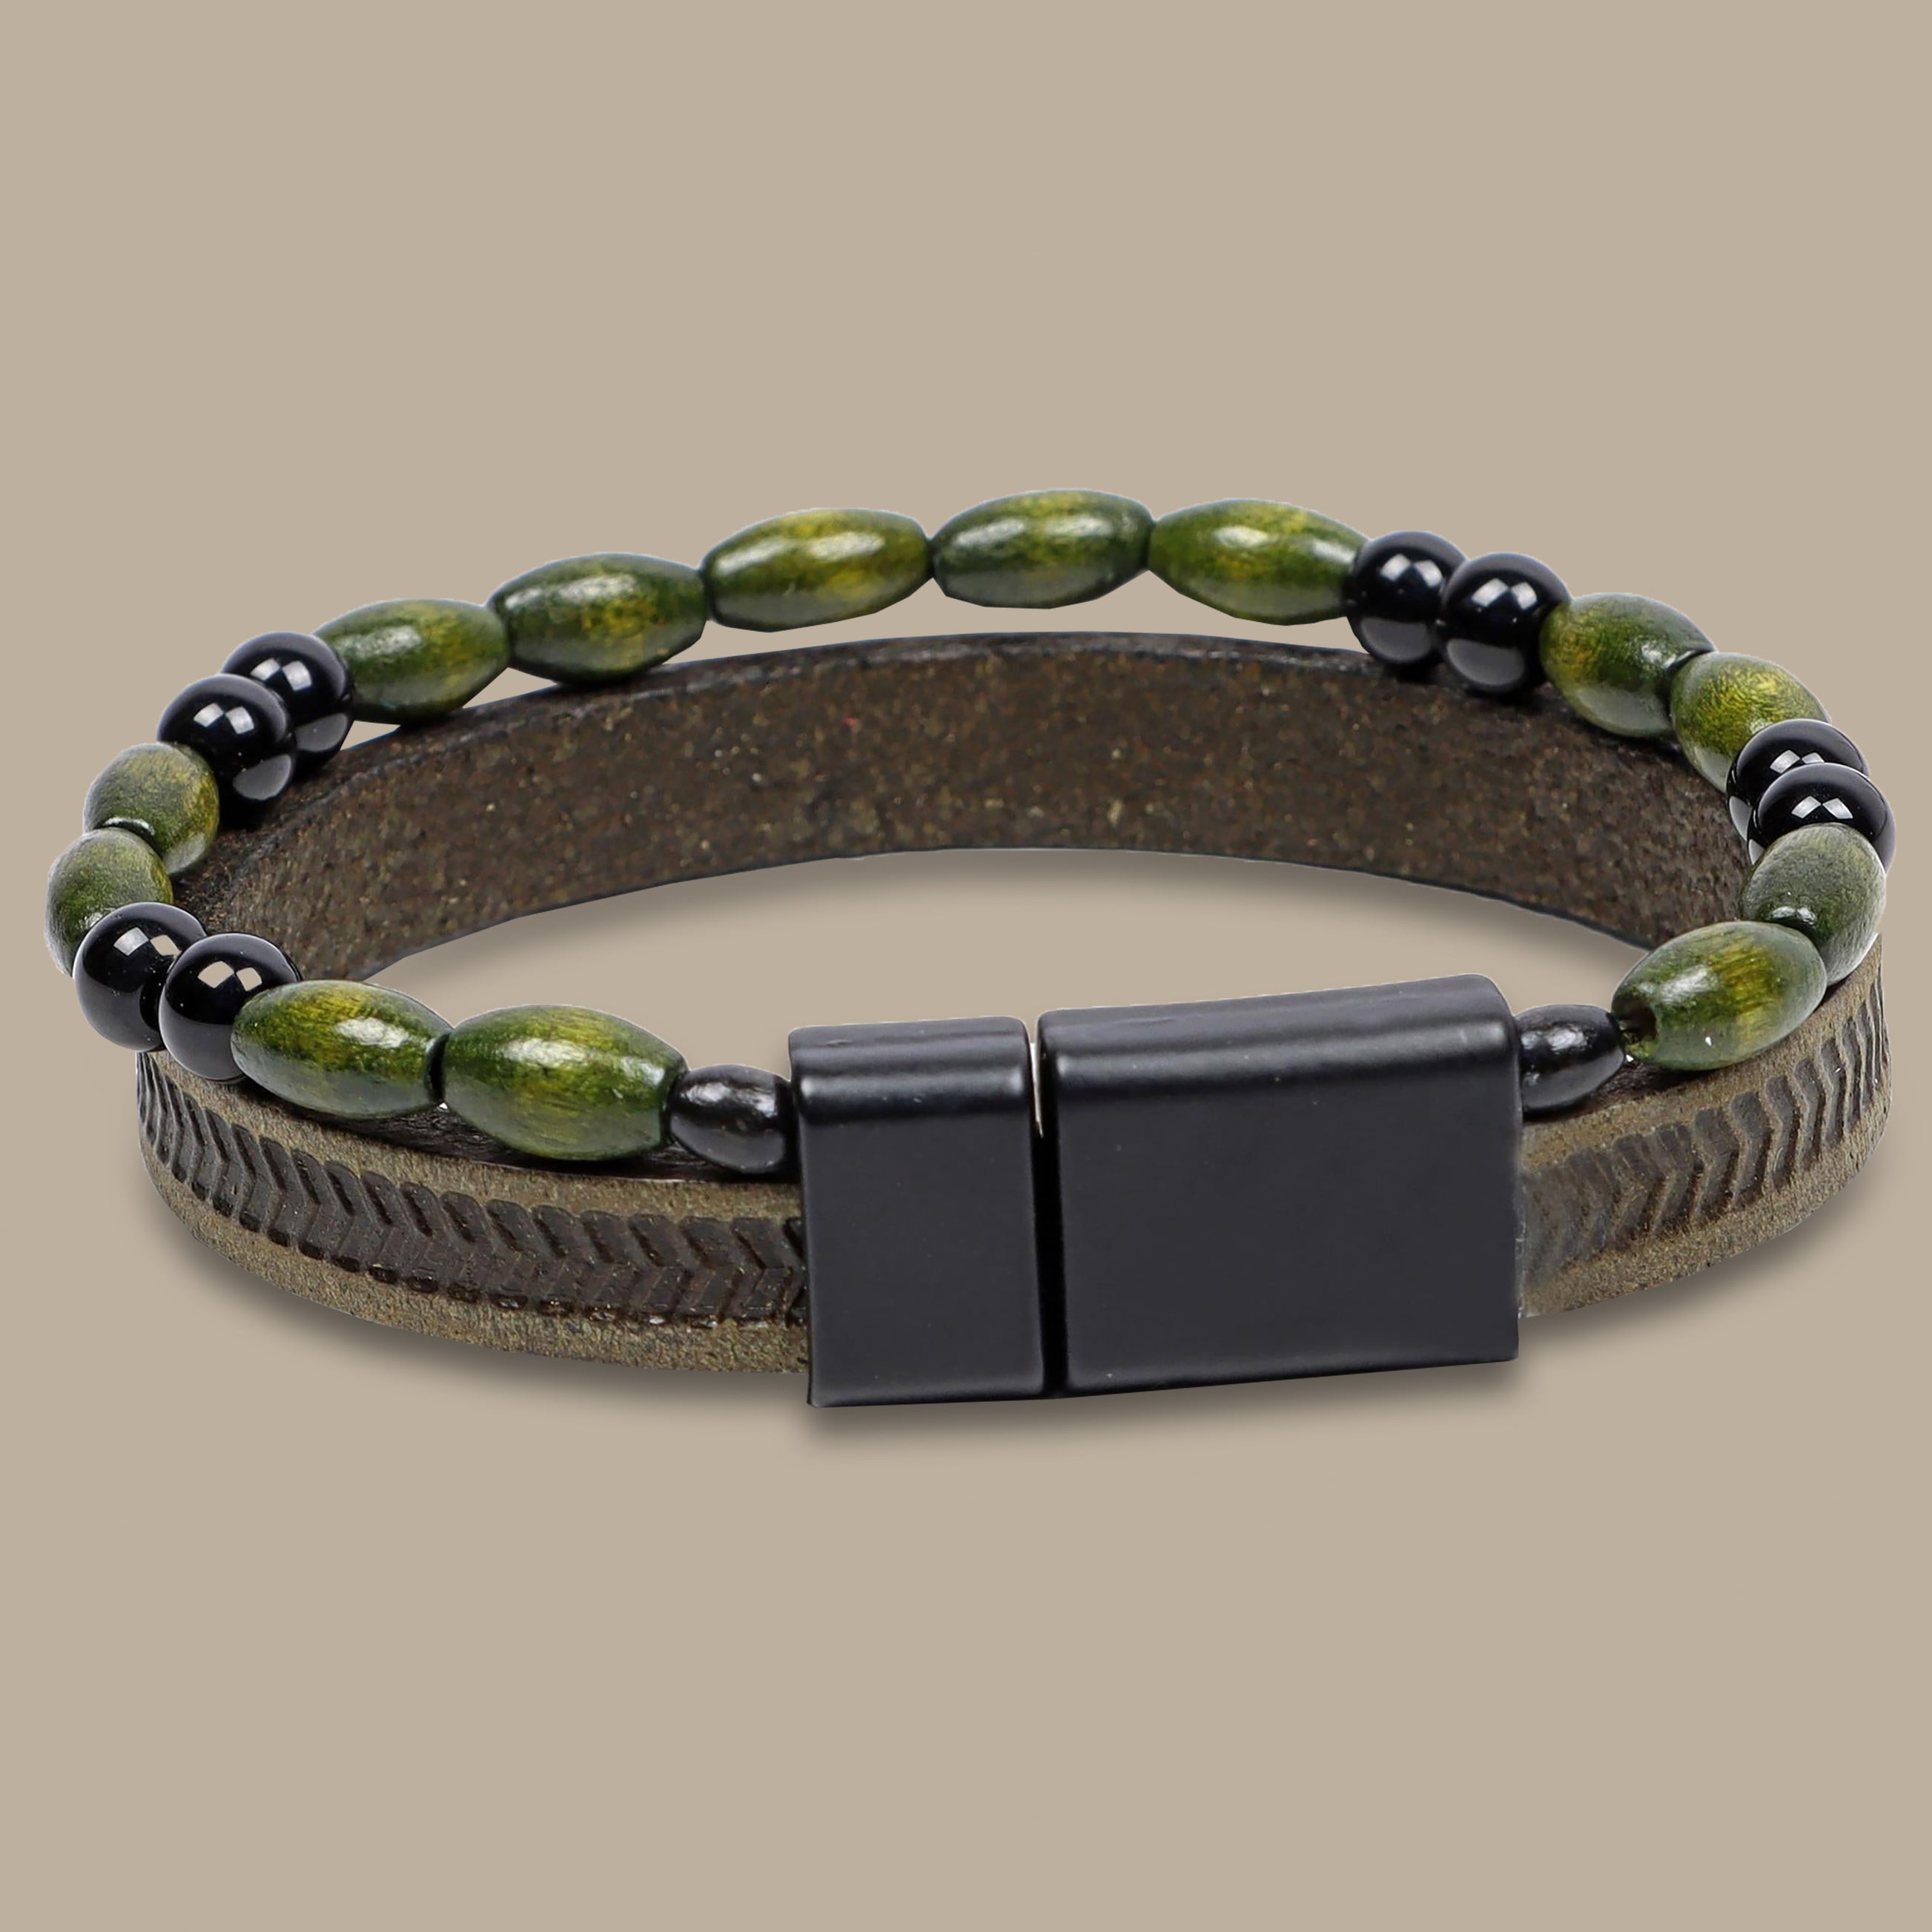 Leather Bracelet With Stones